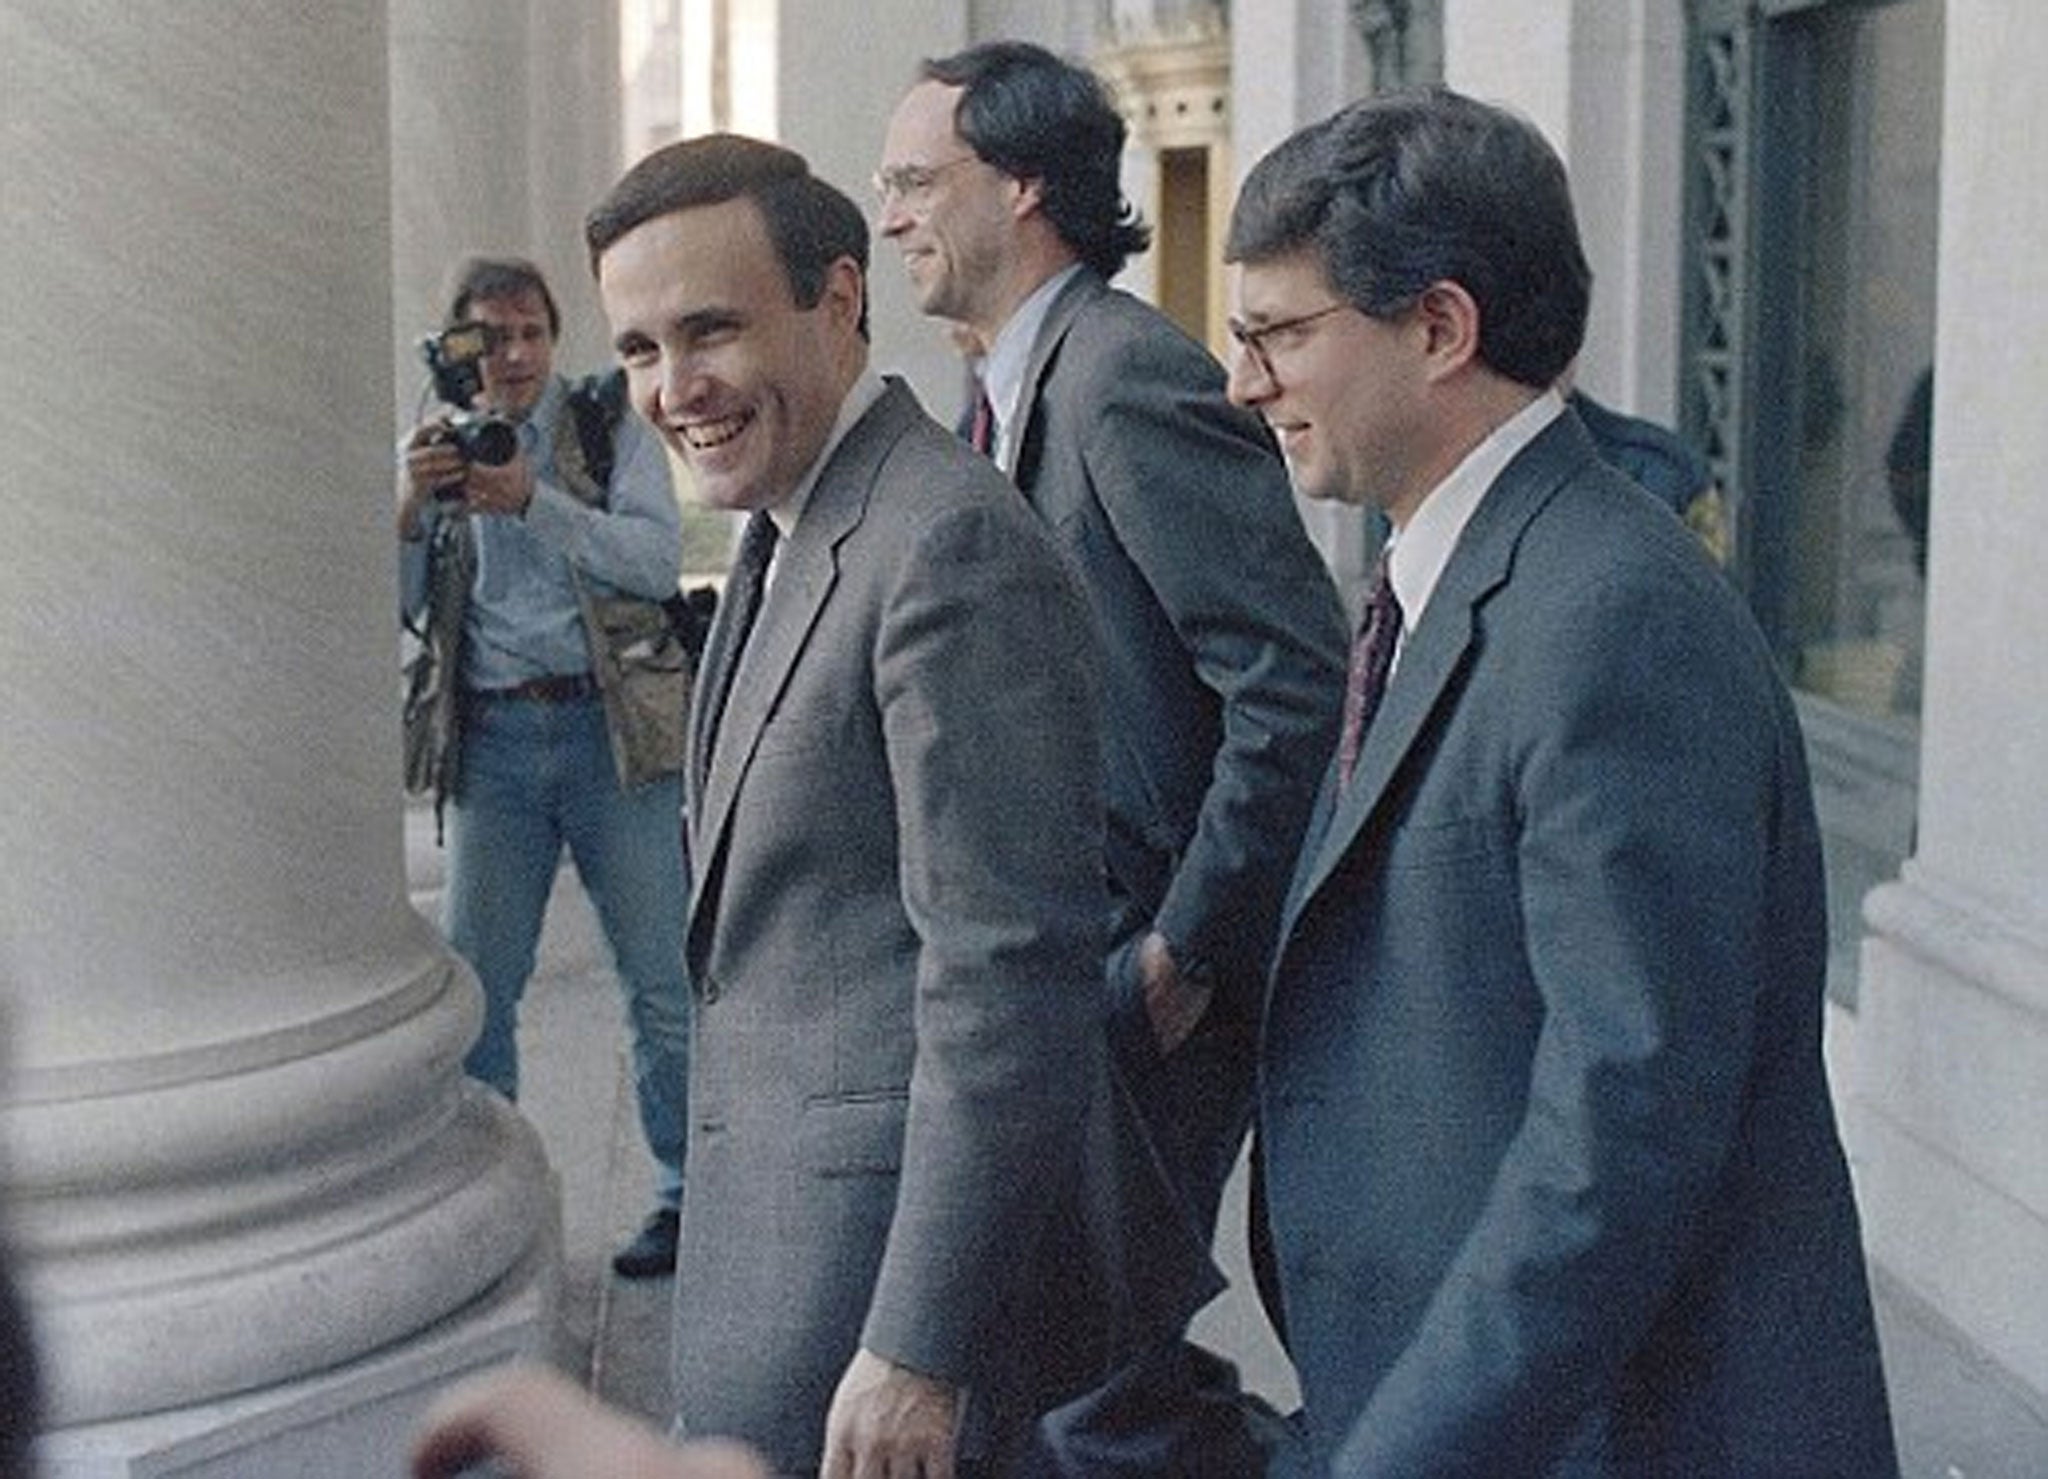 Giuliani during the Mafia Commission Trial in 1986